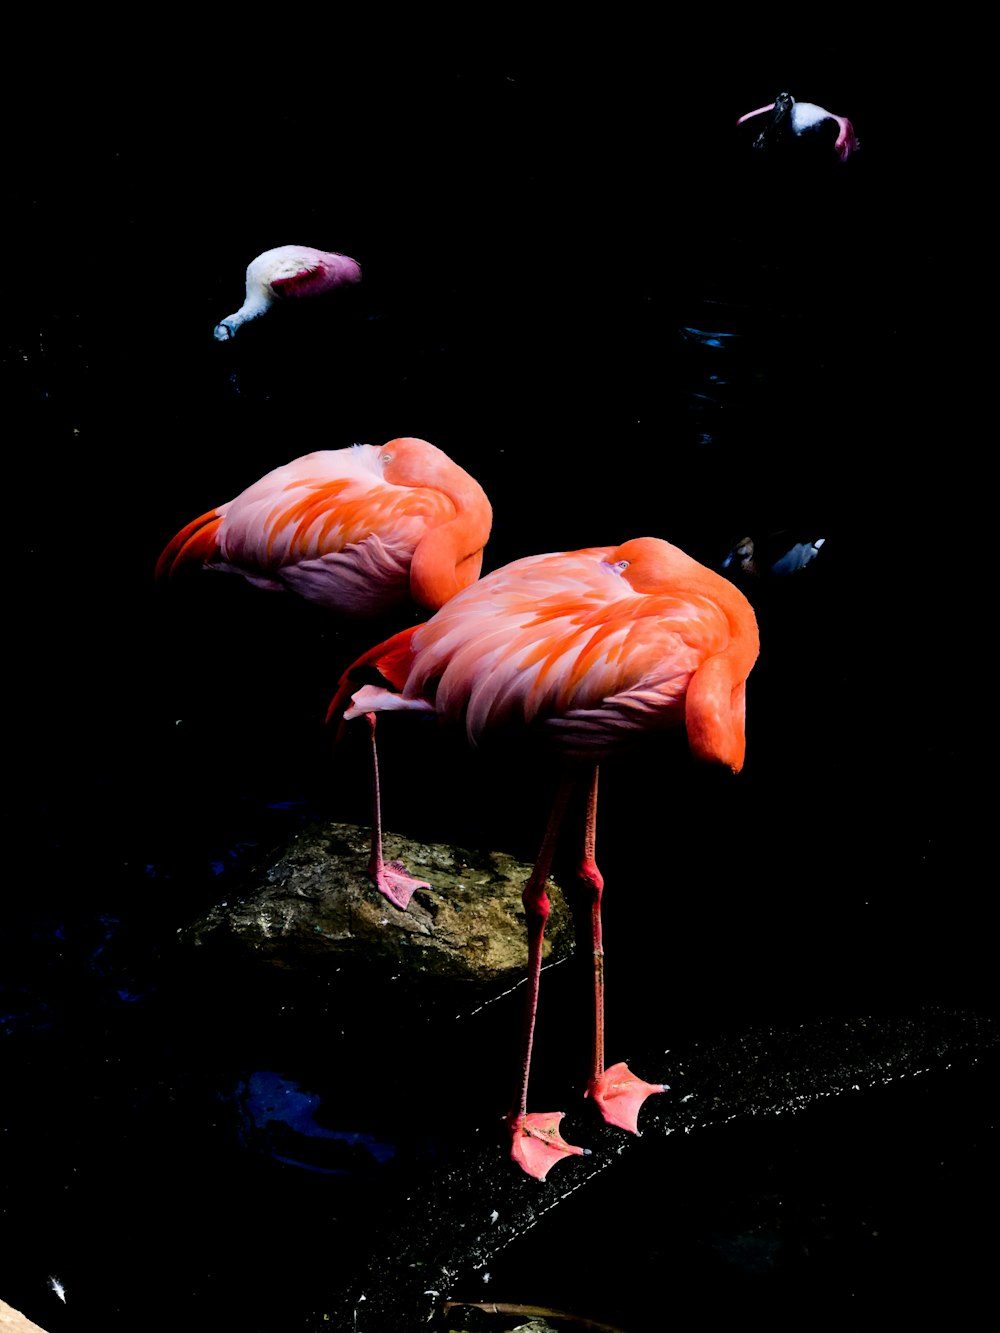 low-light photo of two orange flamingos